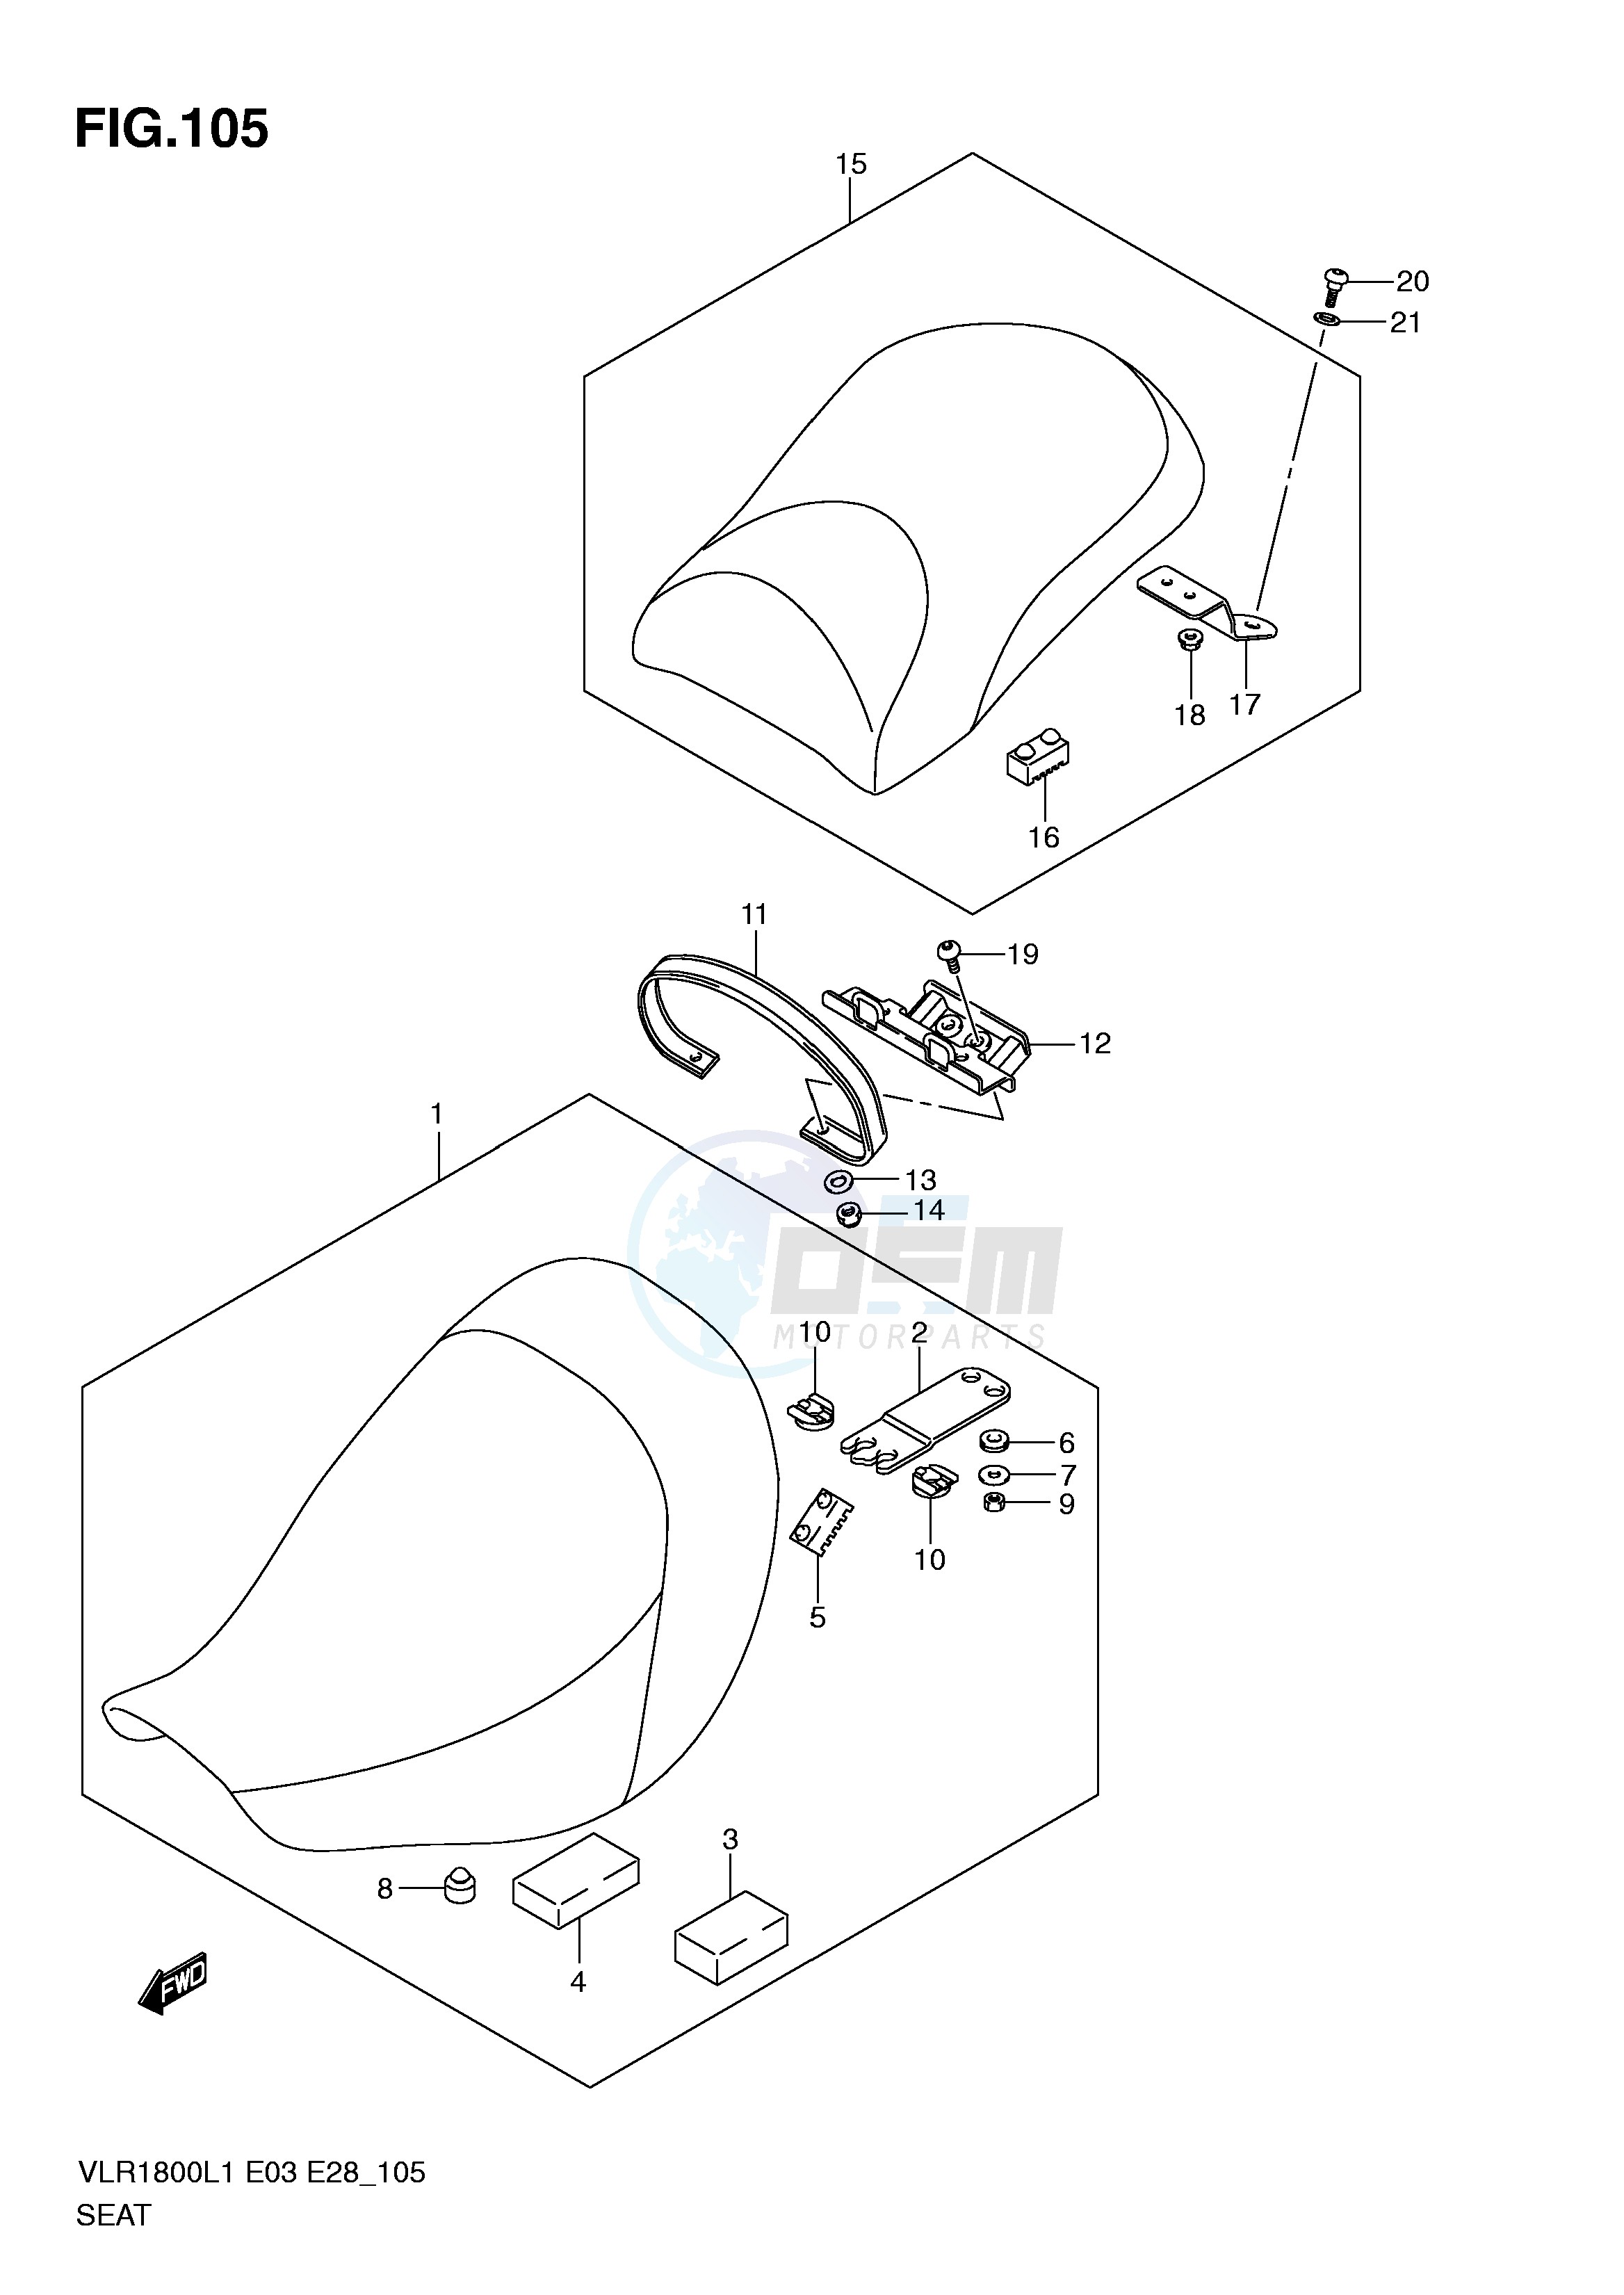 SEAT (VLR1800L1 E3) blueprint